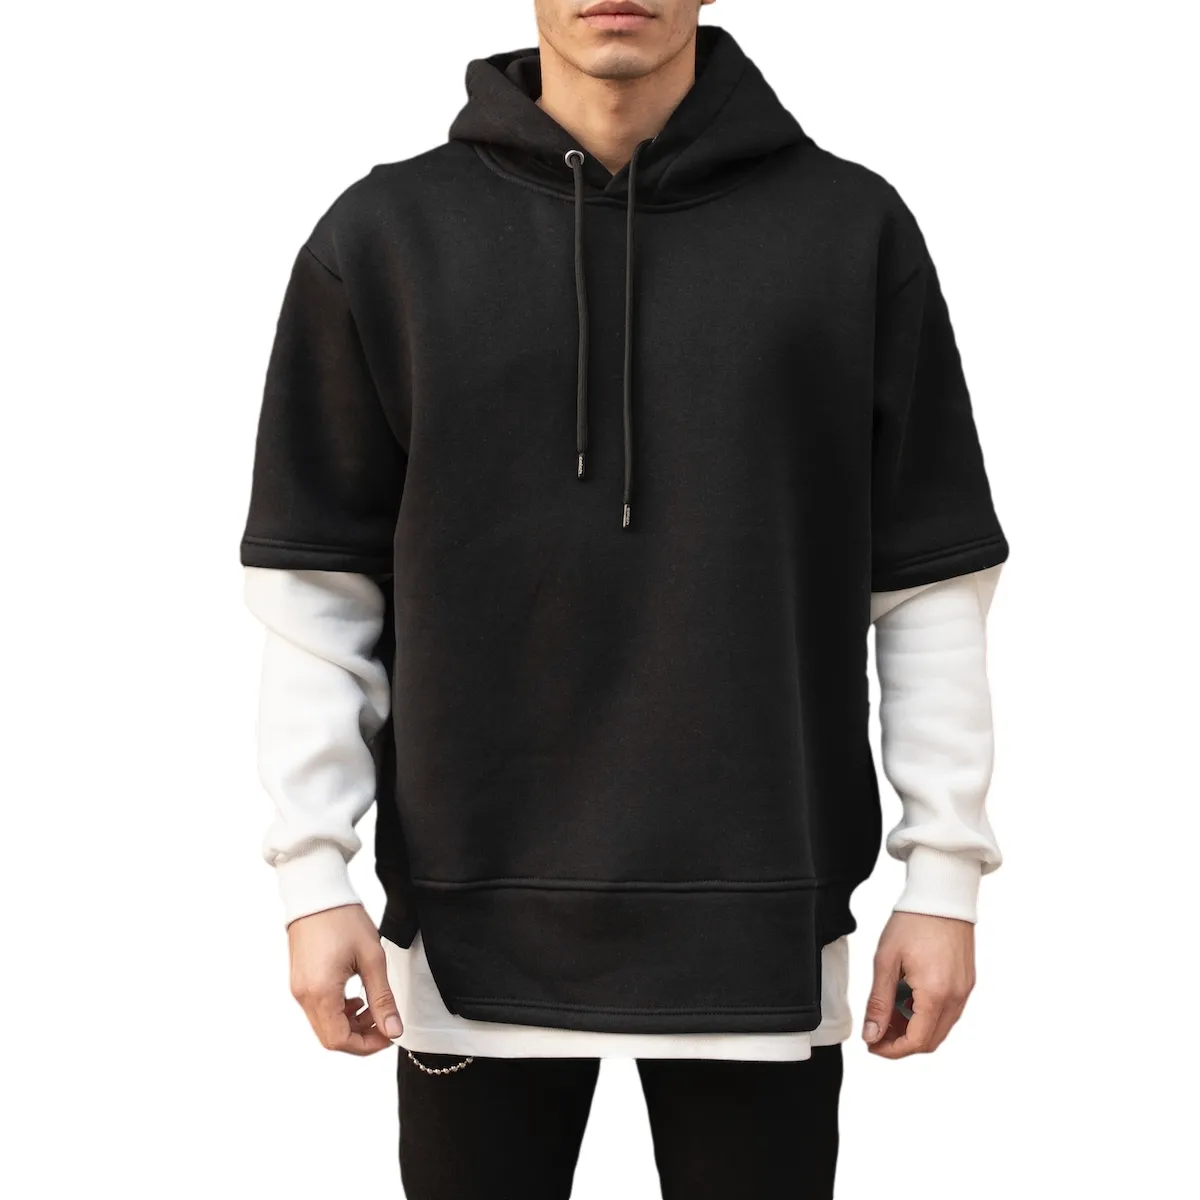 Boy % 100% pamuk erkek boy yarım kollu kazak hoodie yeni stil iyi en iyi fiyat toptan teklif trend 2020